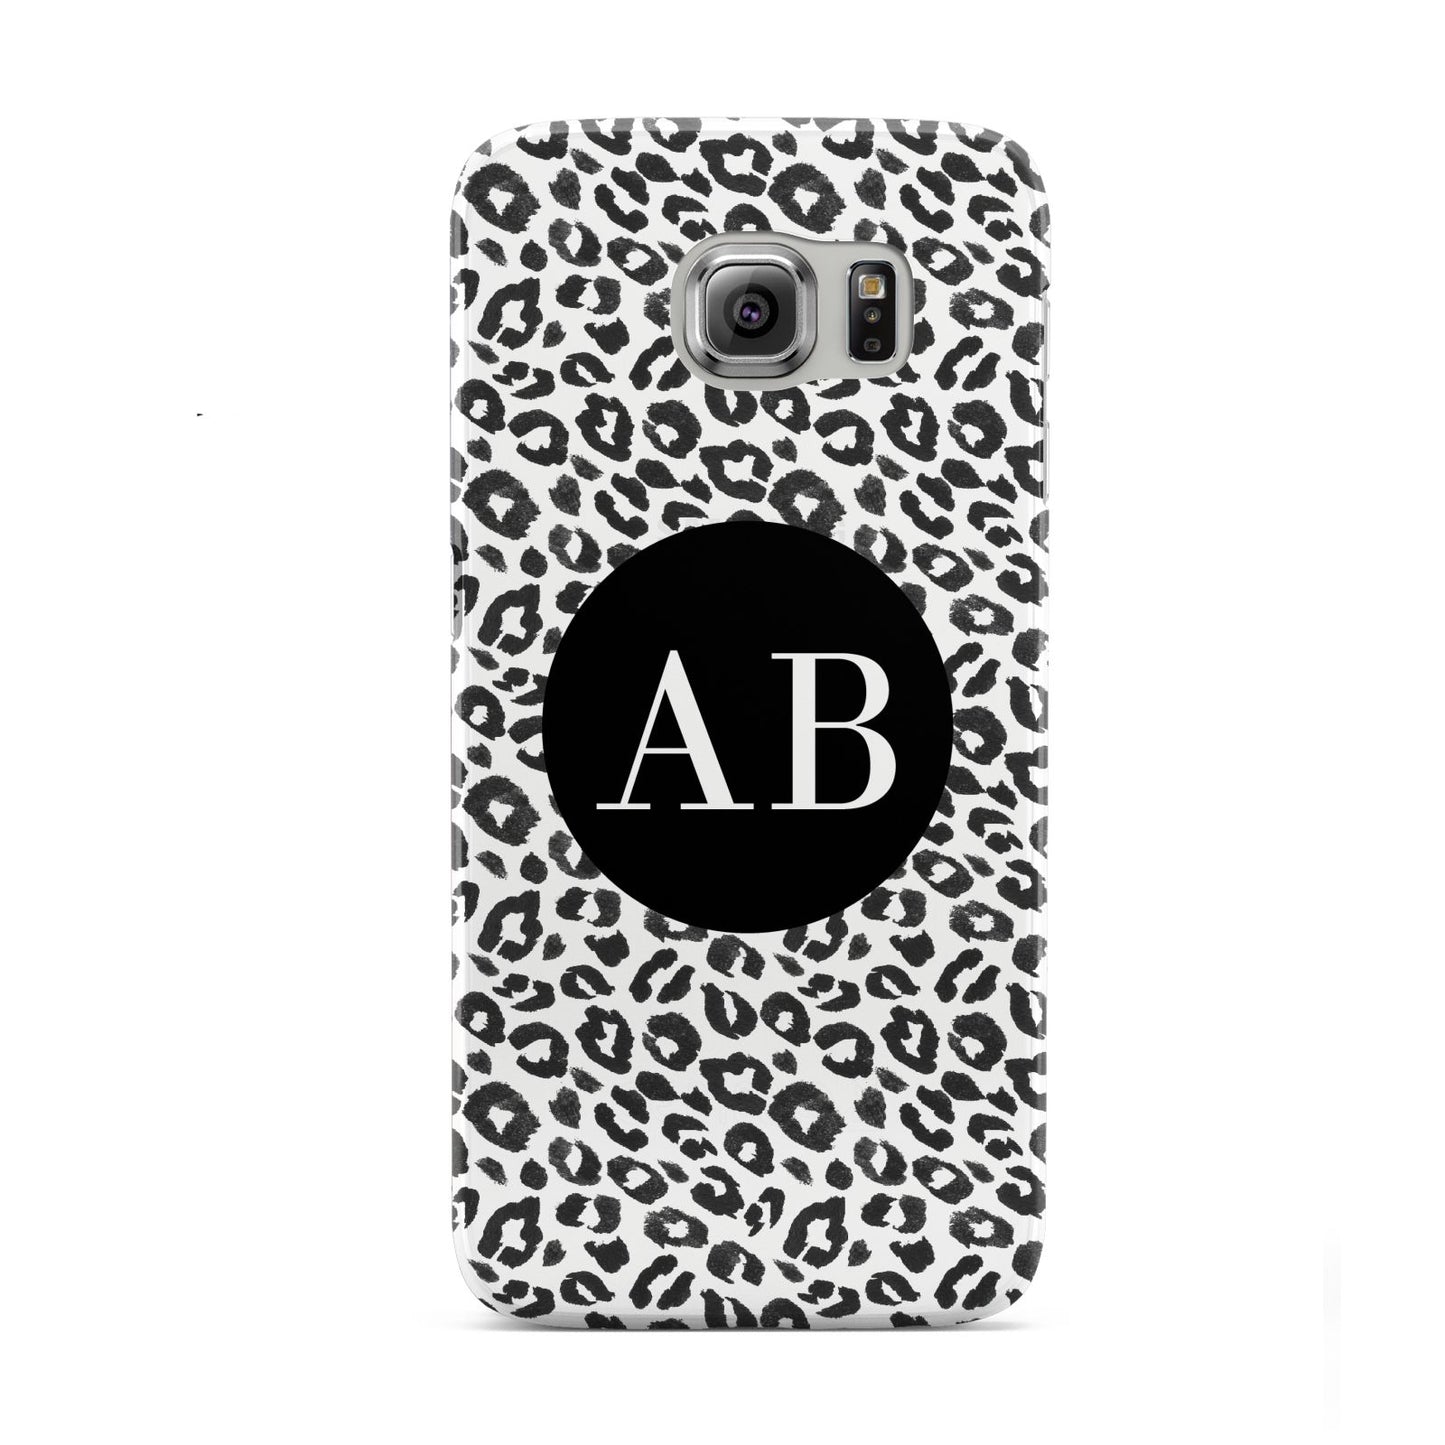 Leopard Print Black and White Samsung Galaxy S6 Case